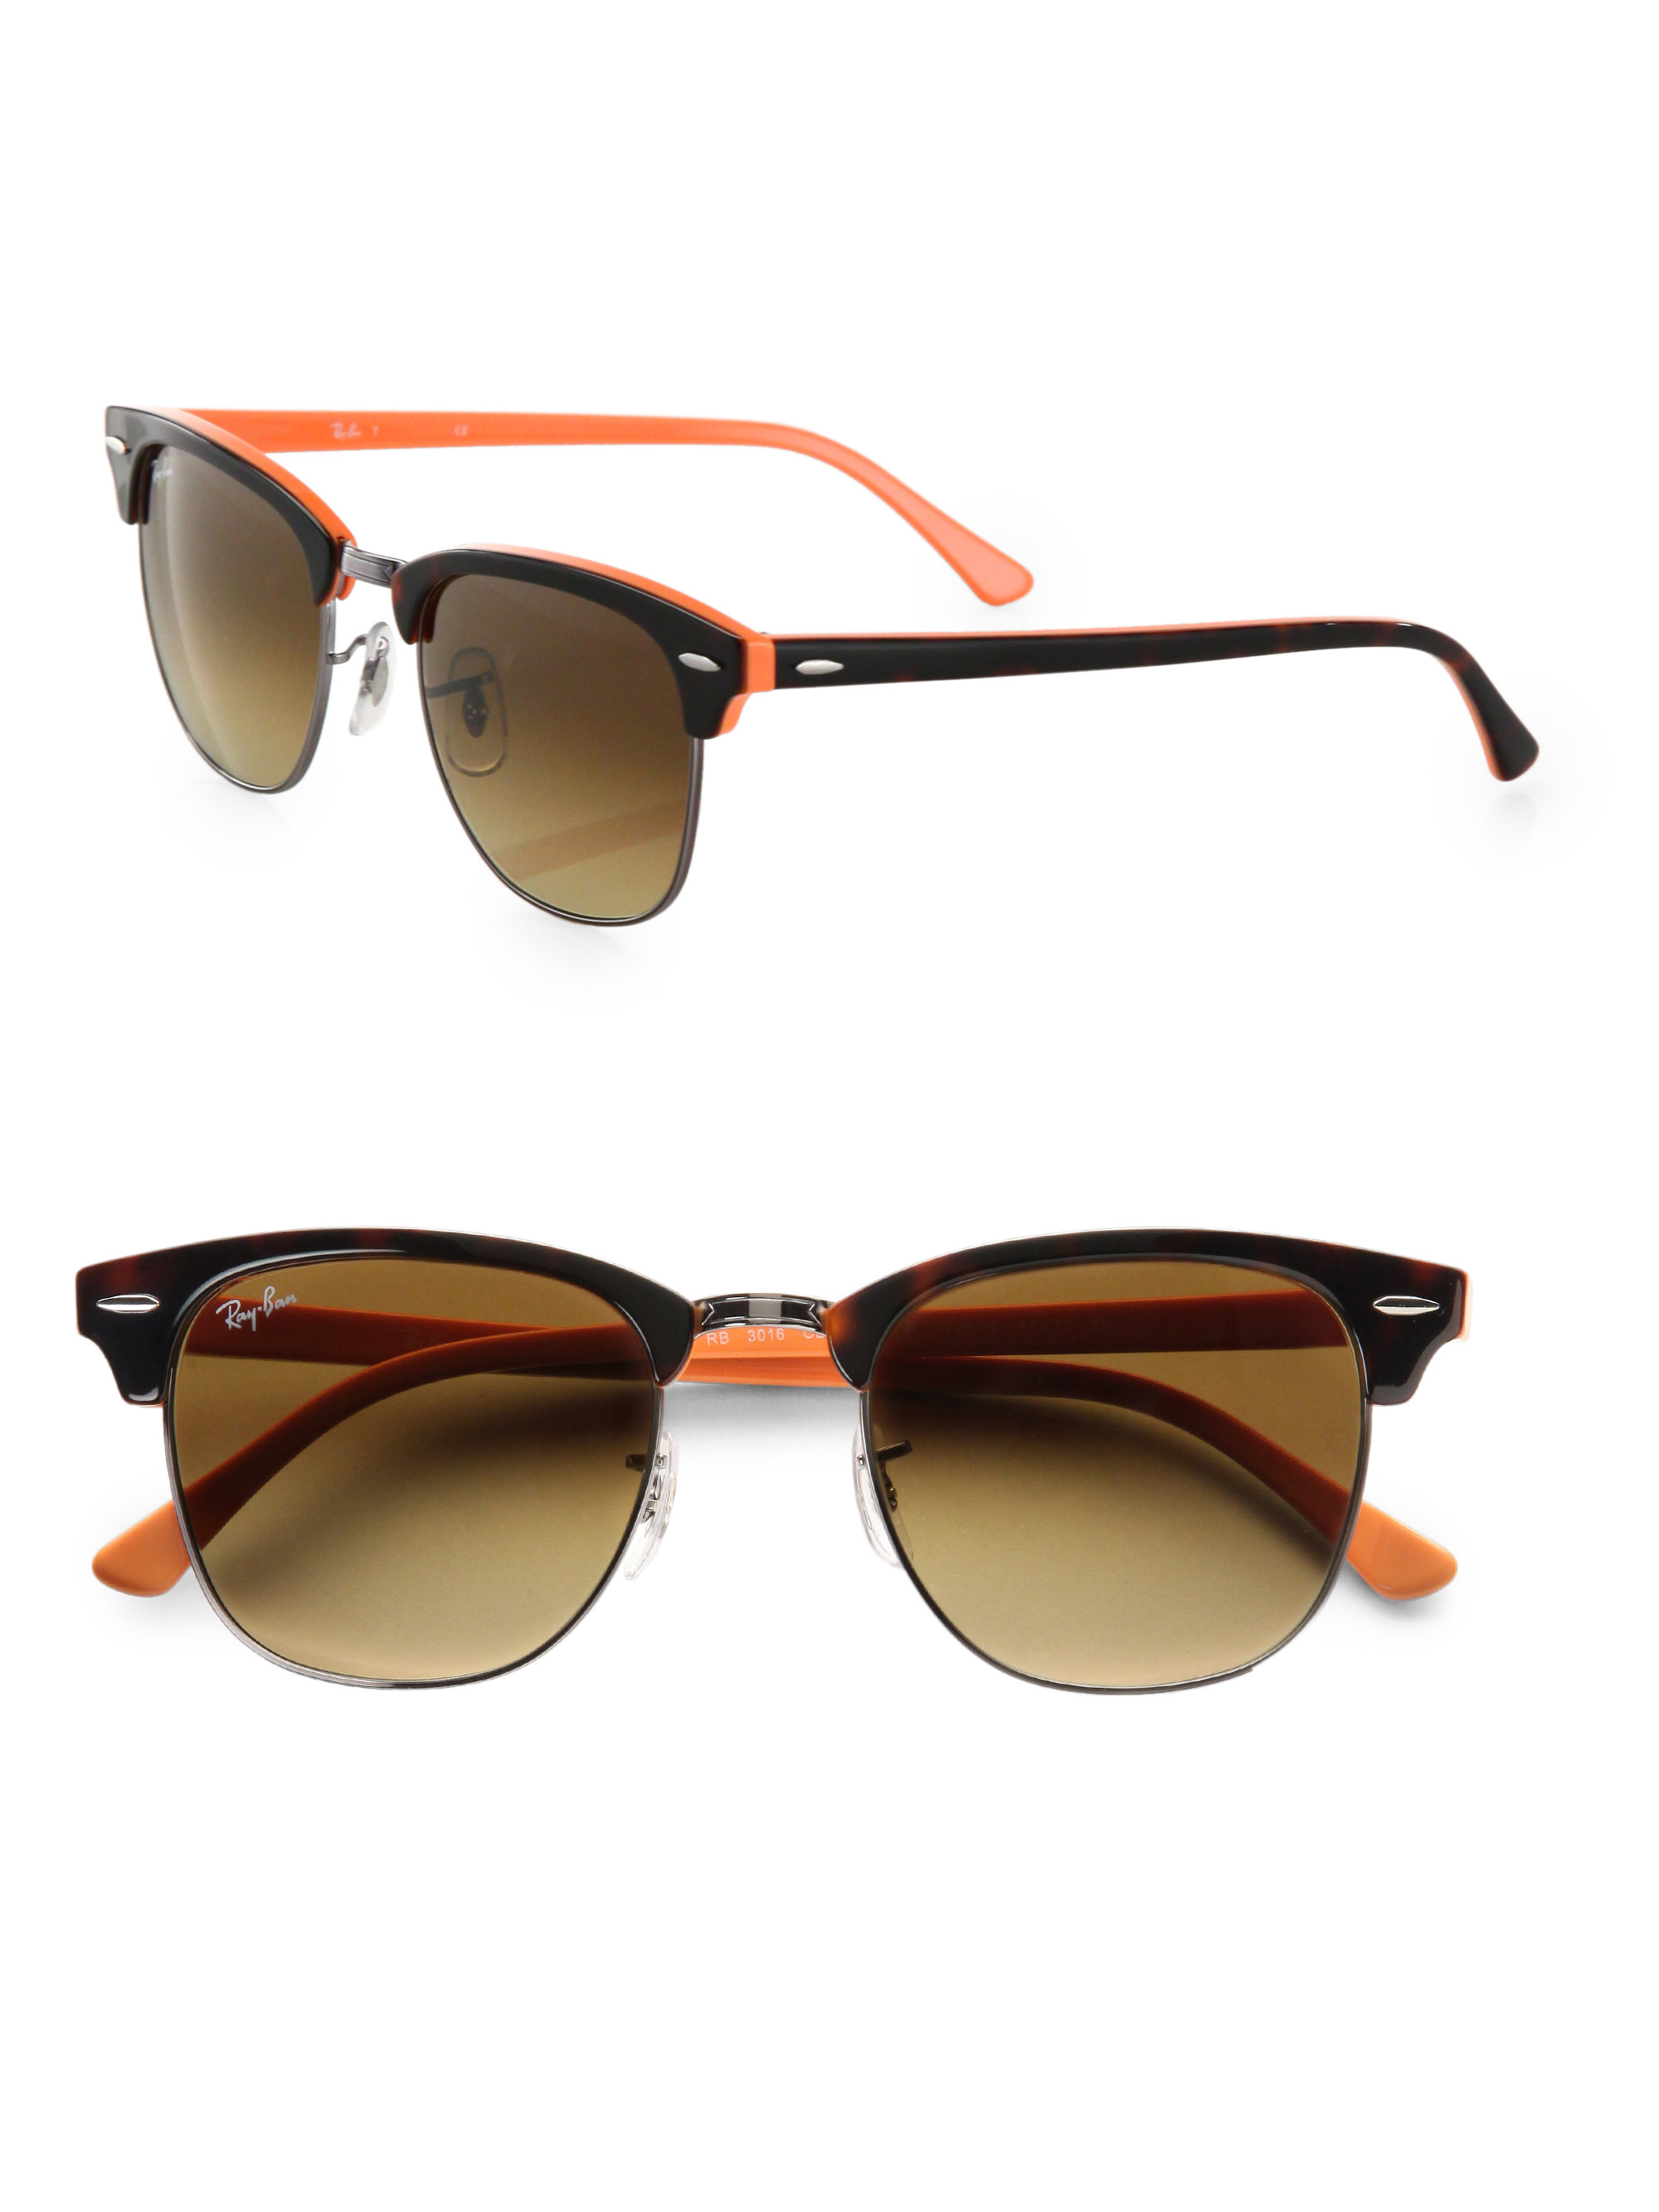 Lyst - Ray-Ban Plastic Clubmaster Sunglasses in Orange for Men